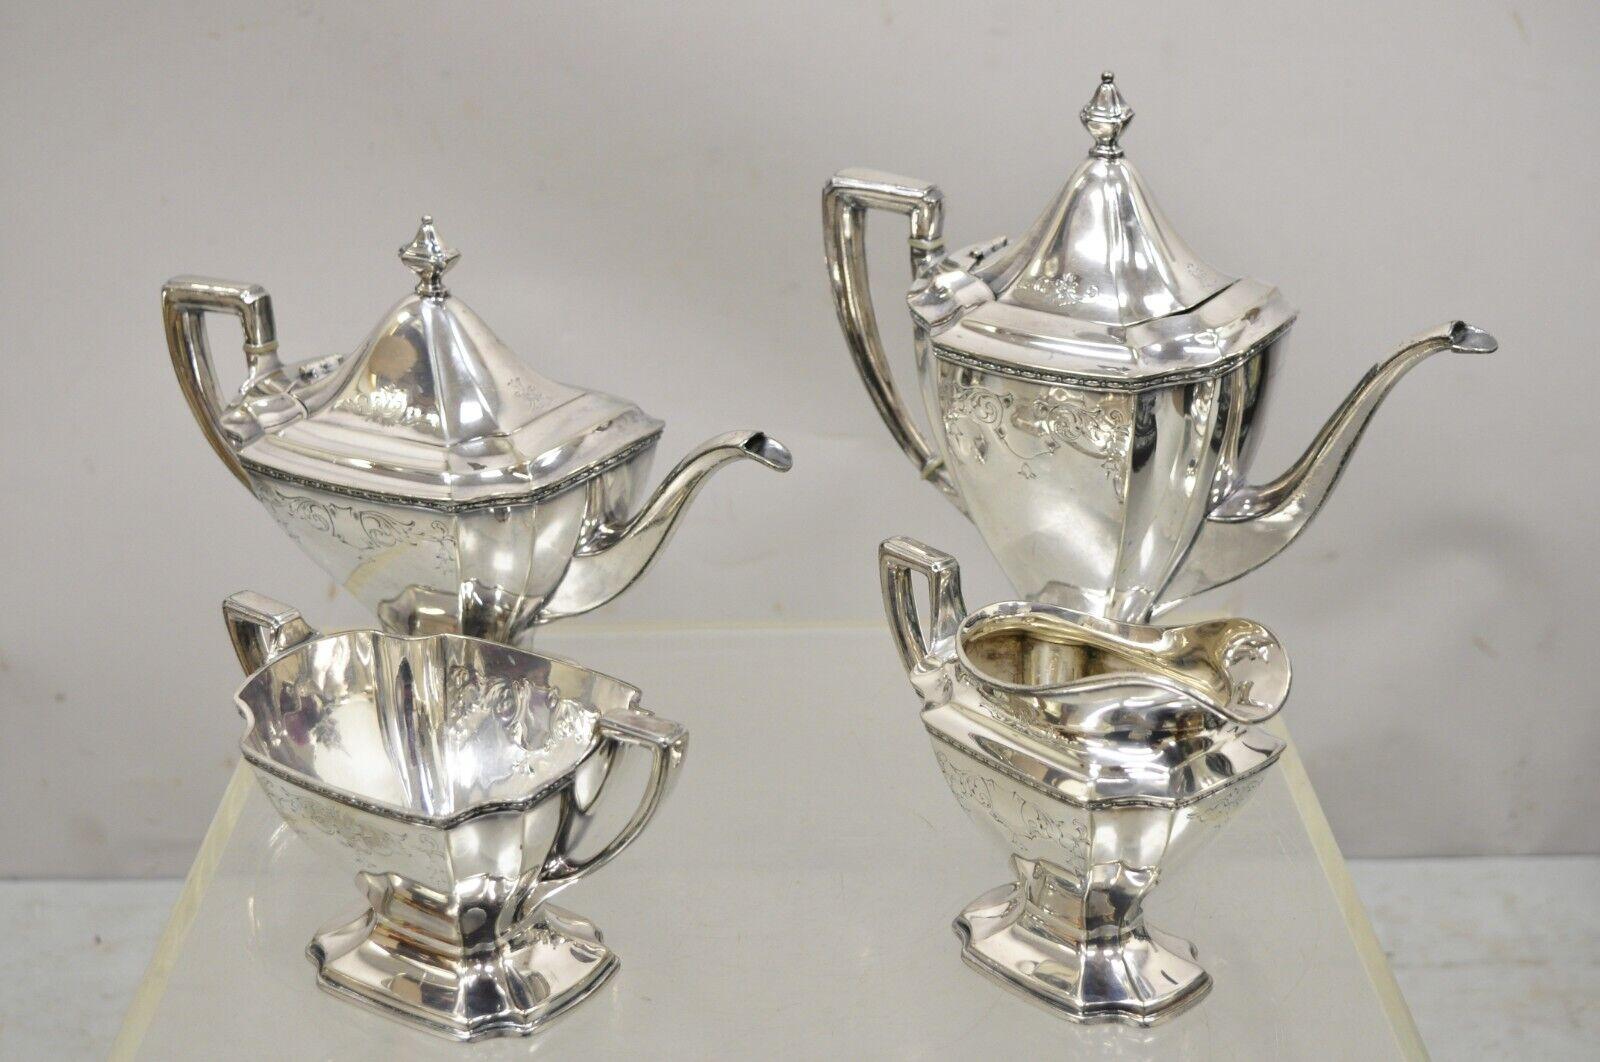 WD Smith Silver Co Chippendale EPNS Hepplewhite Silver Plated Tea Set, Pot, Creamer, Sugar - 4pcs. Item features (1) Creamer, (1) sugar bowl, (1) coffee pot, (1) tea pot, marked 